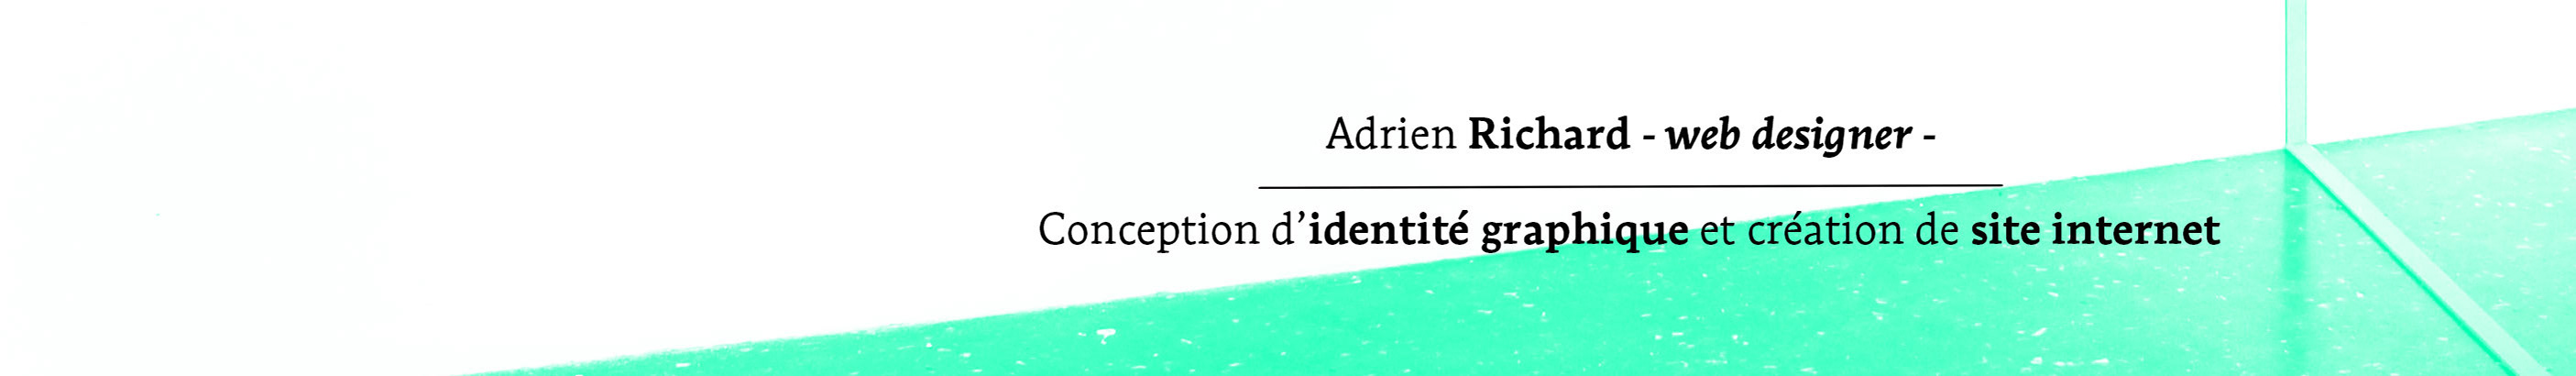 Adrien Richard's profile banner